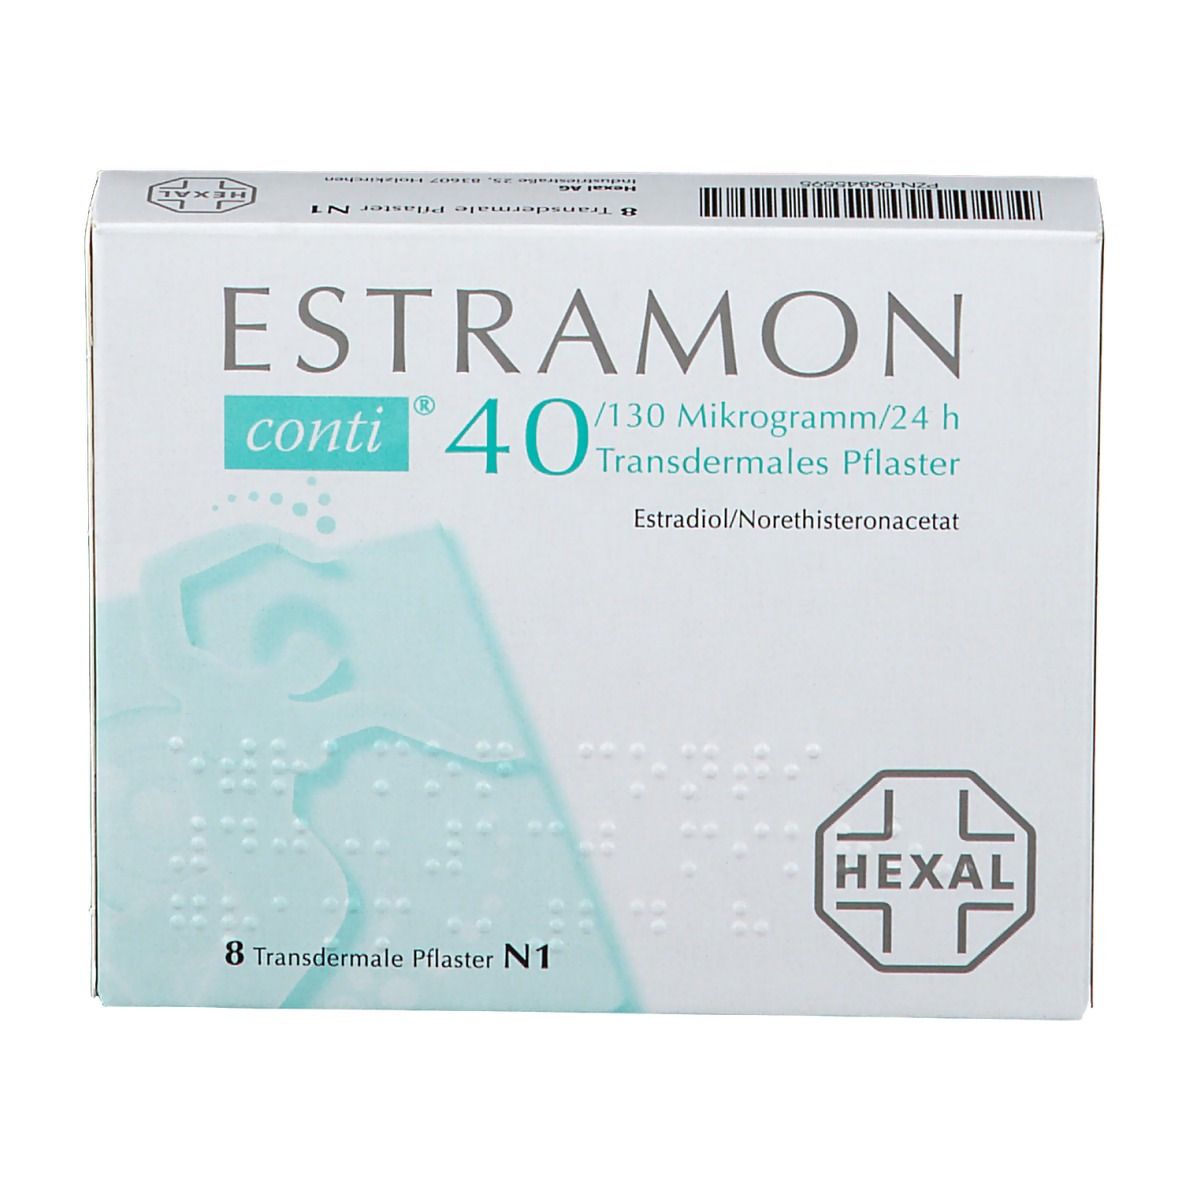 ESTRAMON conti® 40/130 µg/24 Stunden